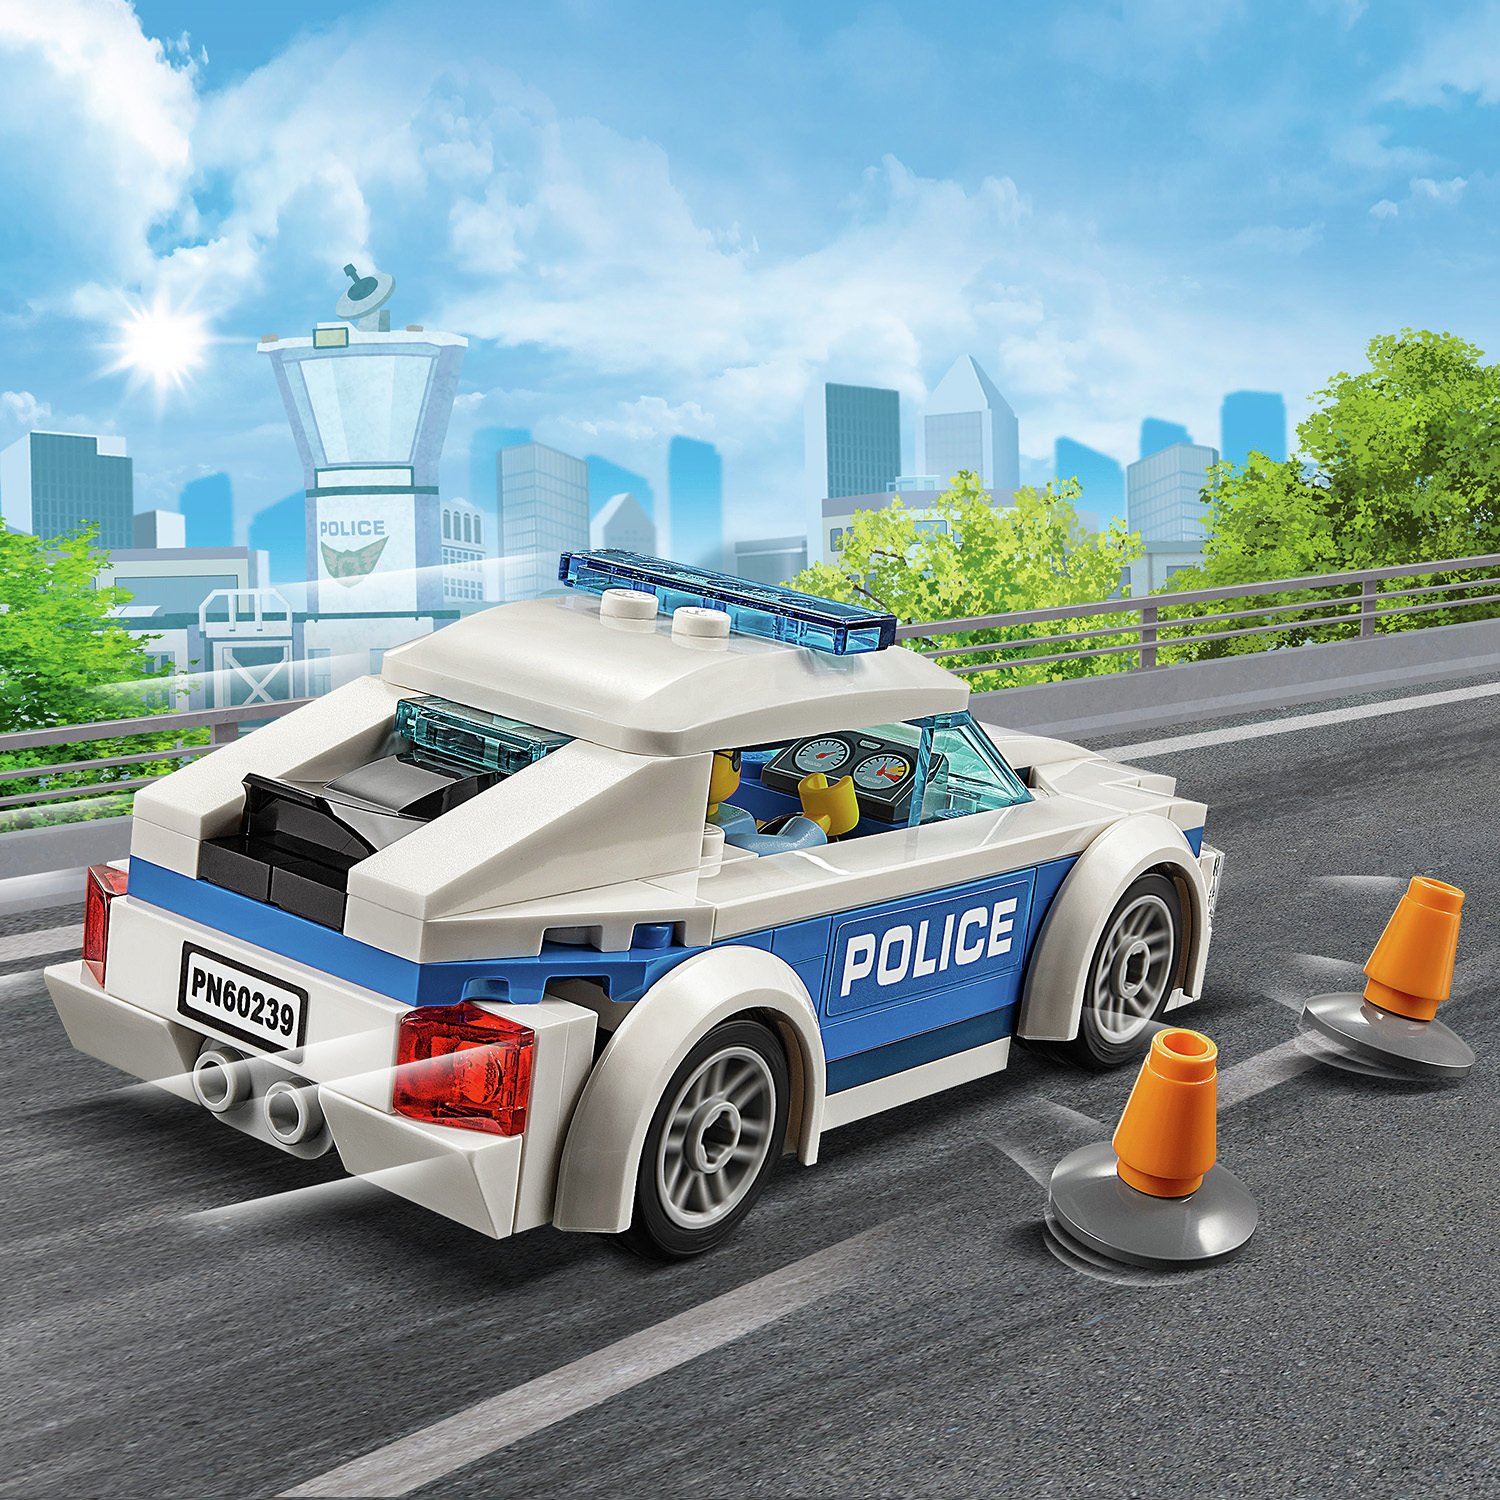 LEGO City Police Patrol Toy Car Review